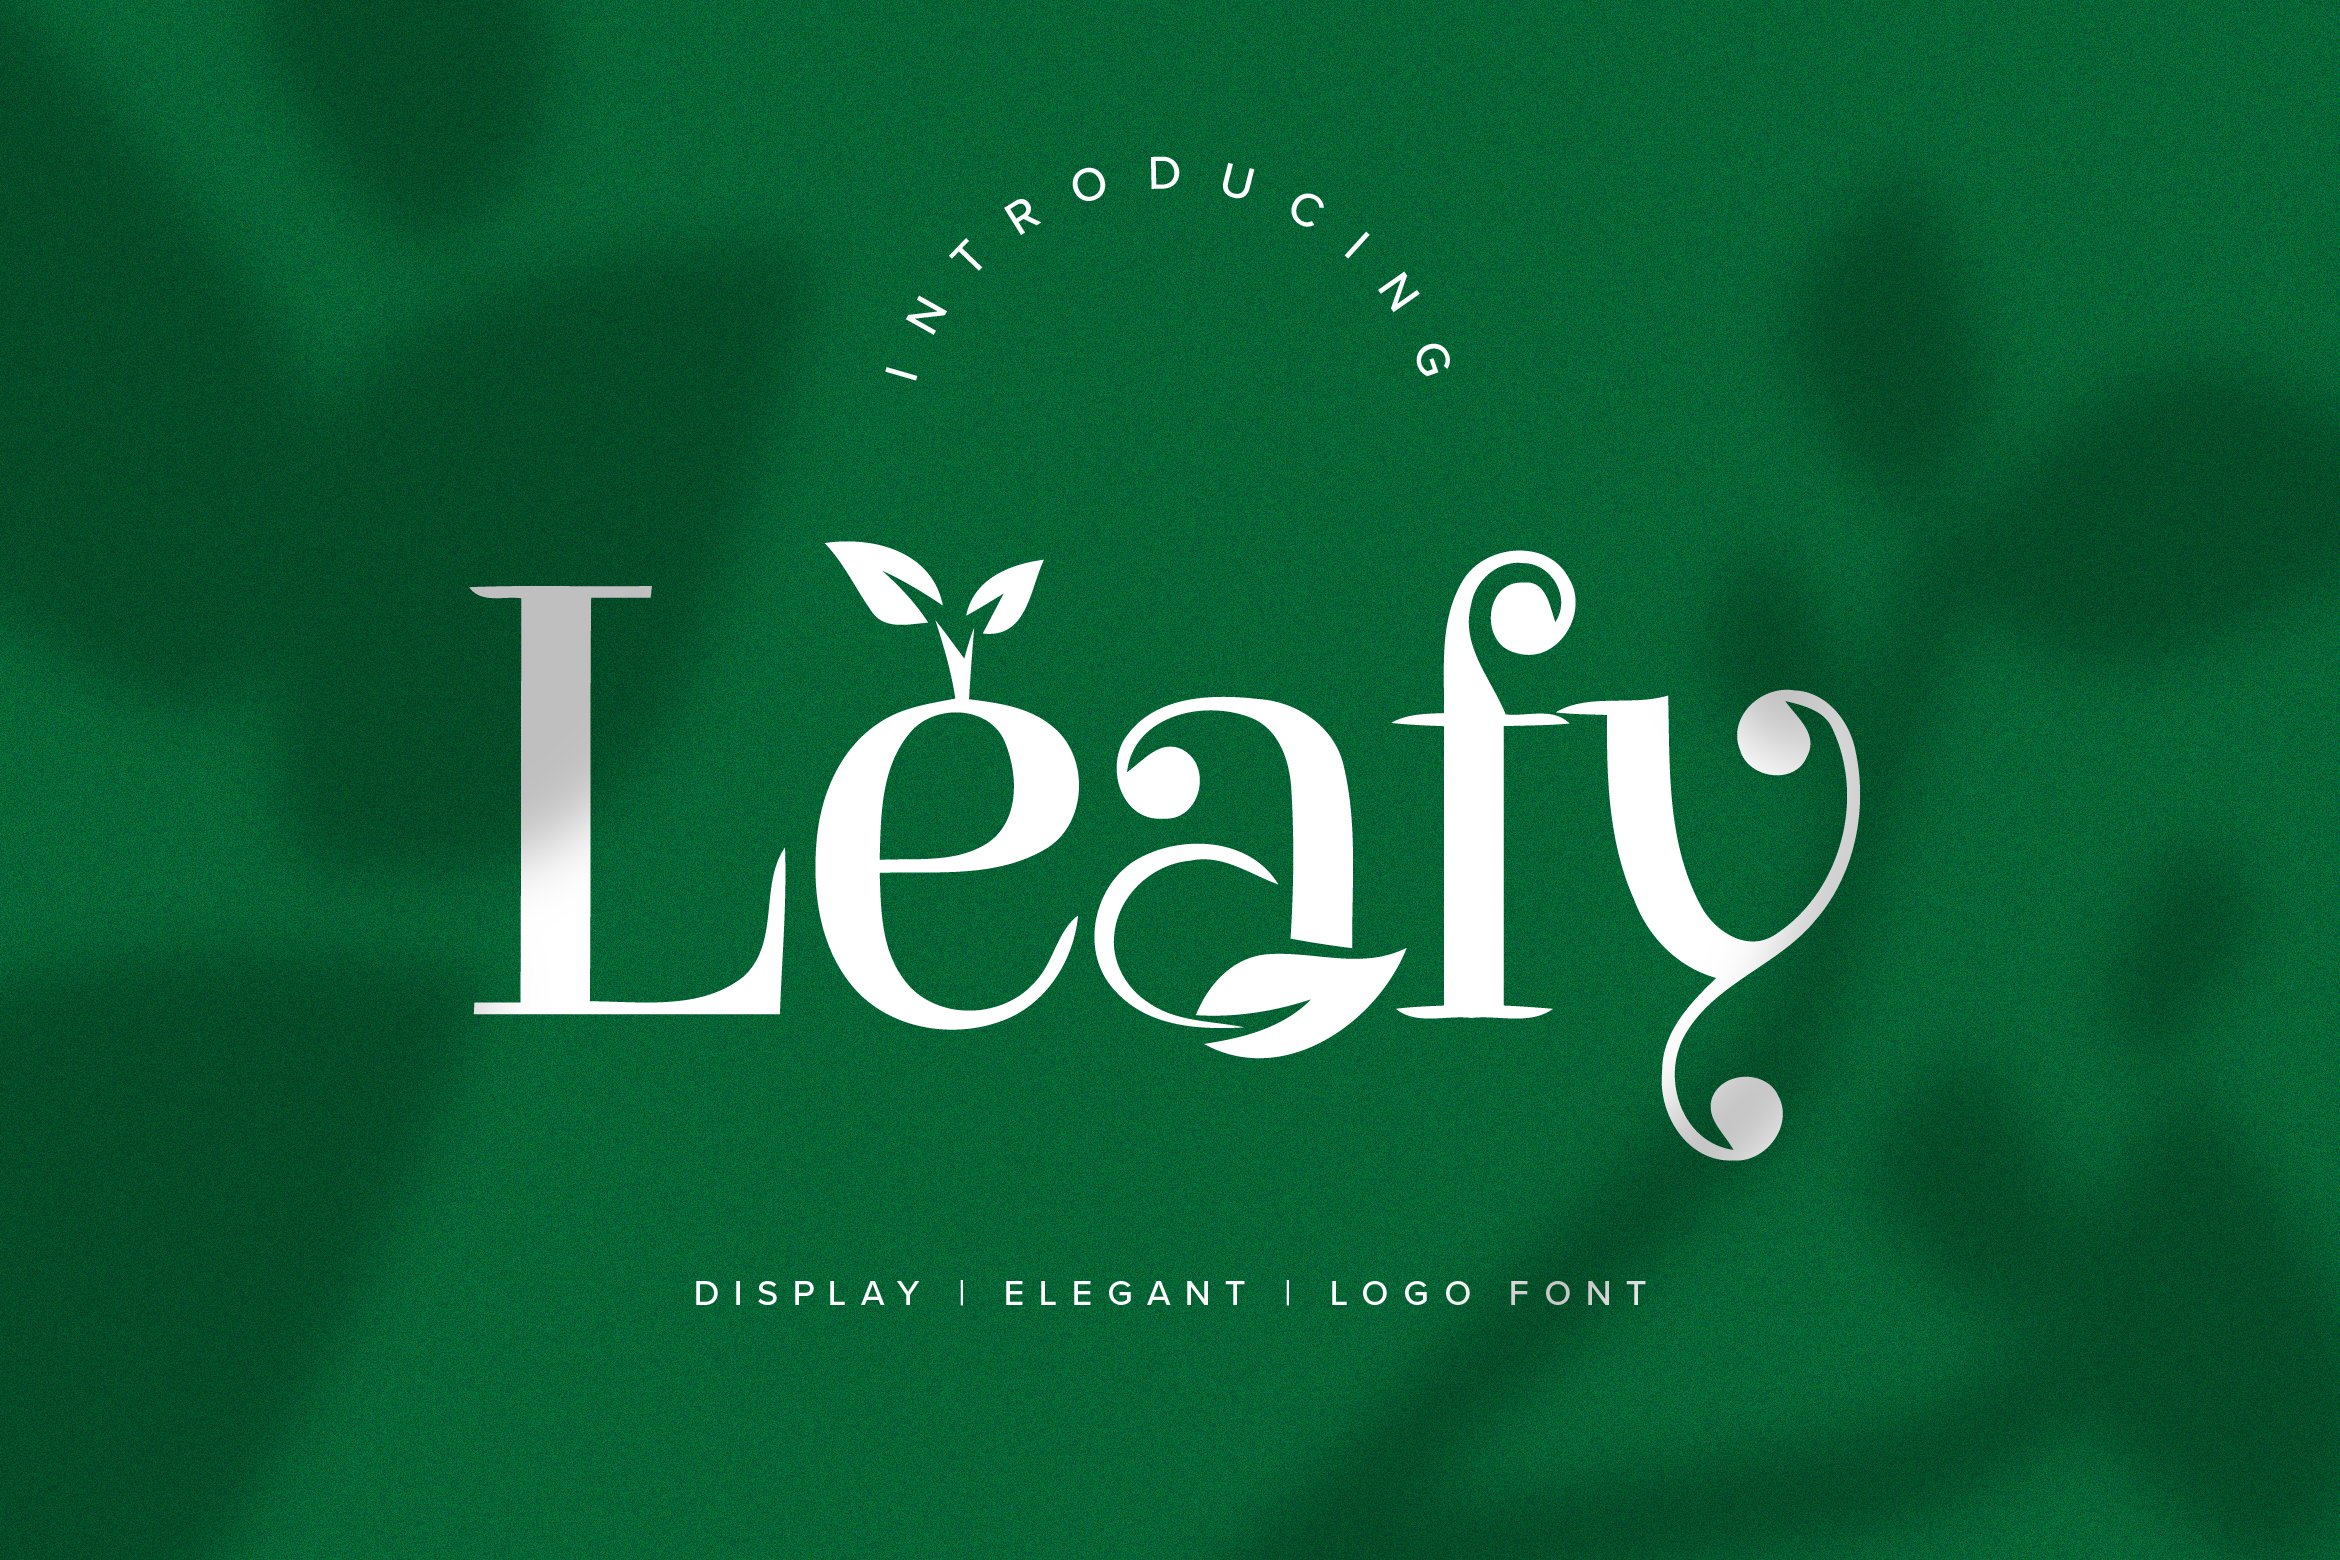 Leafy Logo Font cover image.